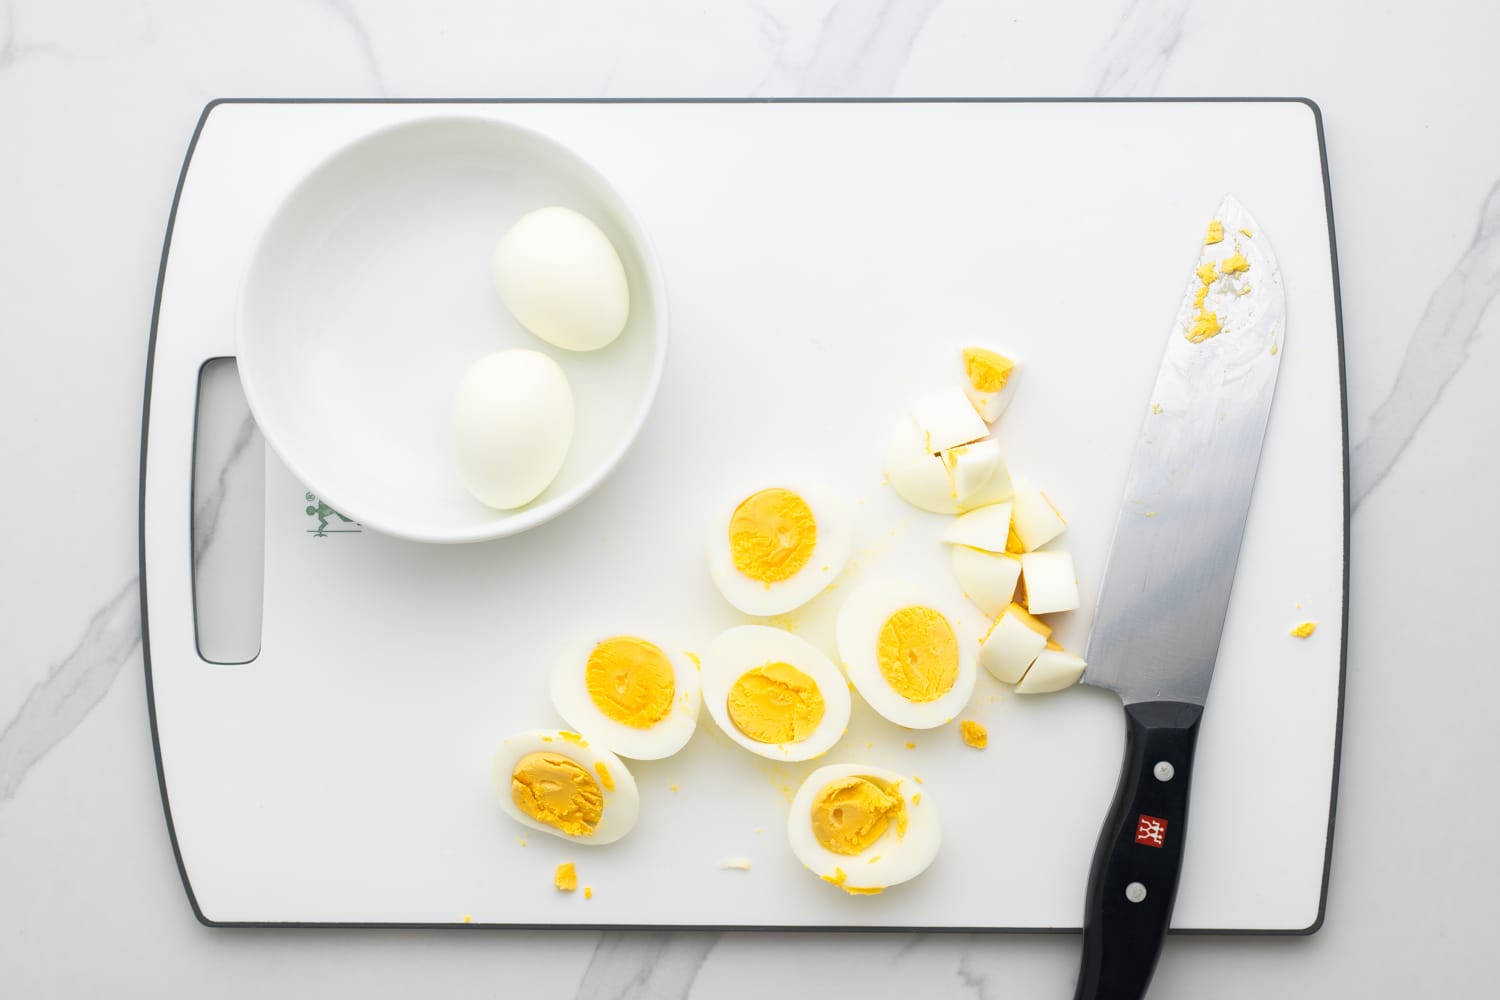 Chopping eggs on a white cutting board